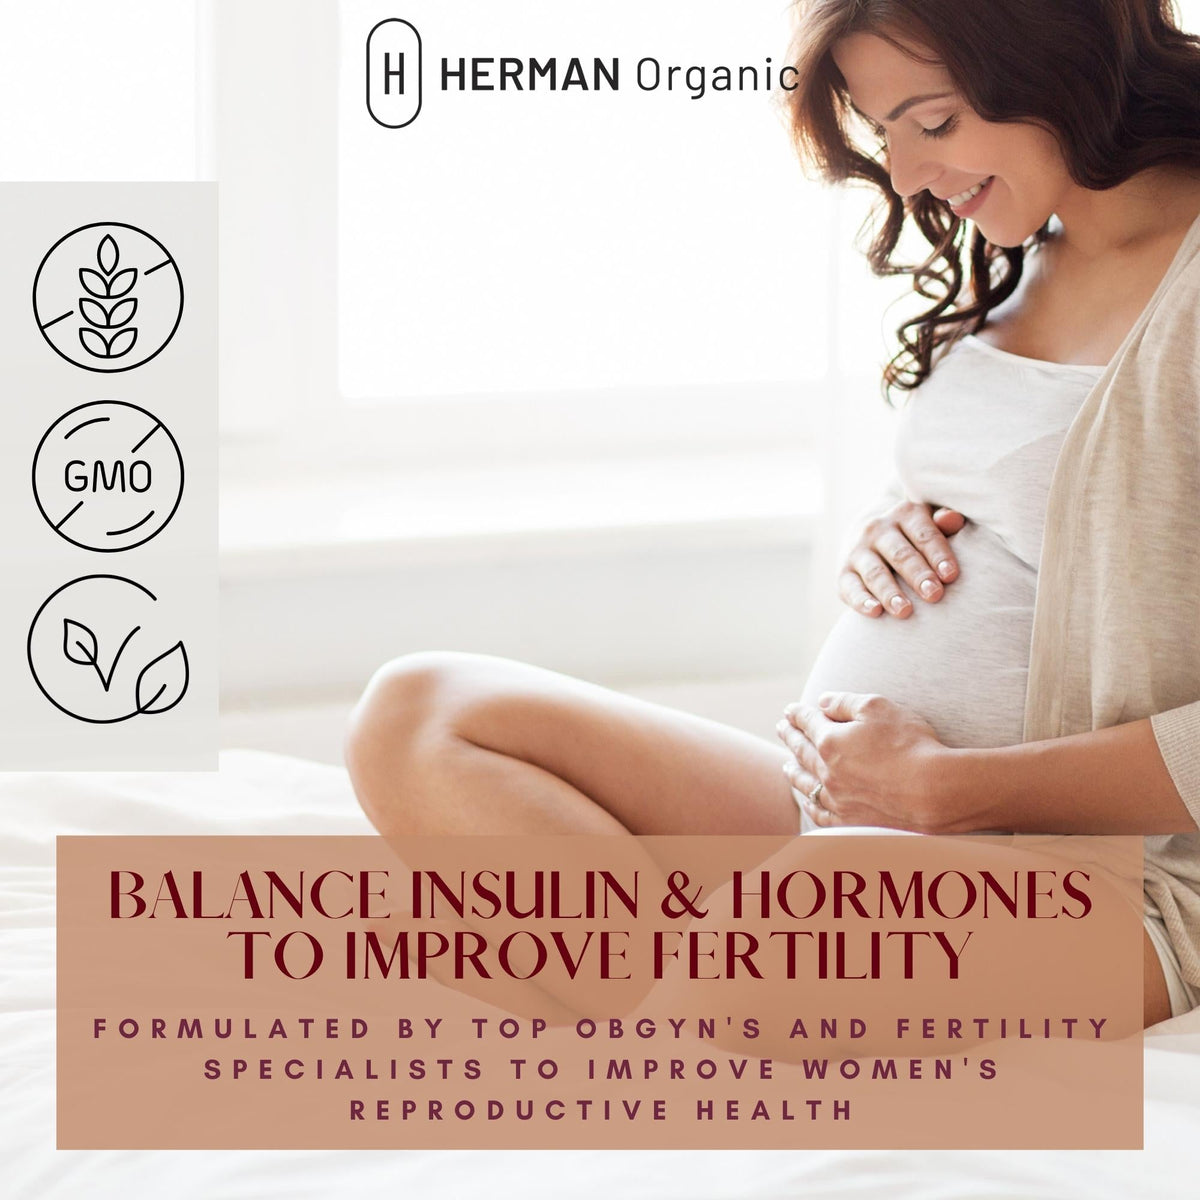 Herman Organic Herman Organic Fertility Support+